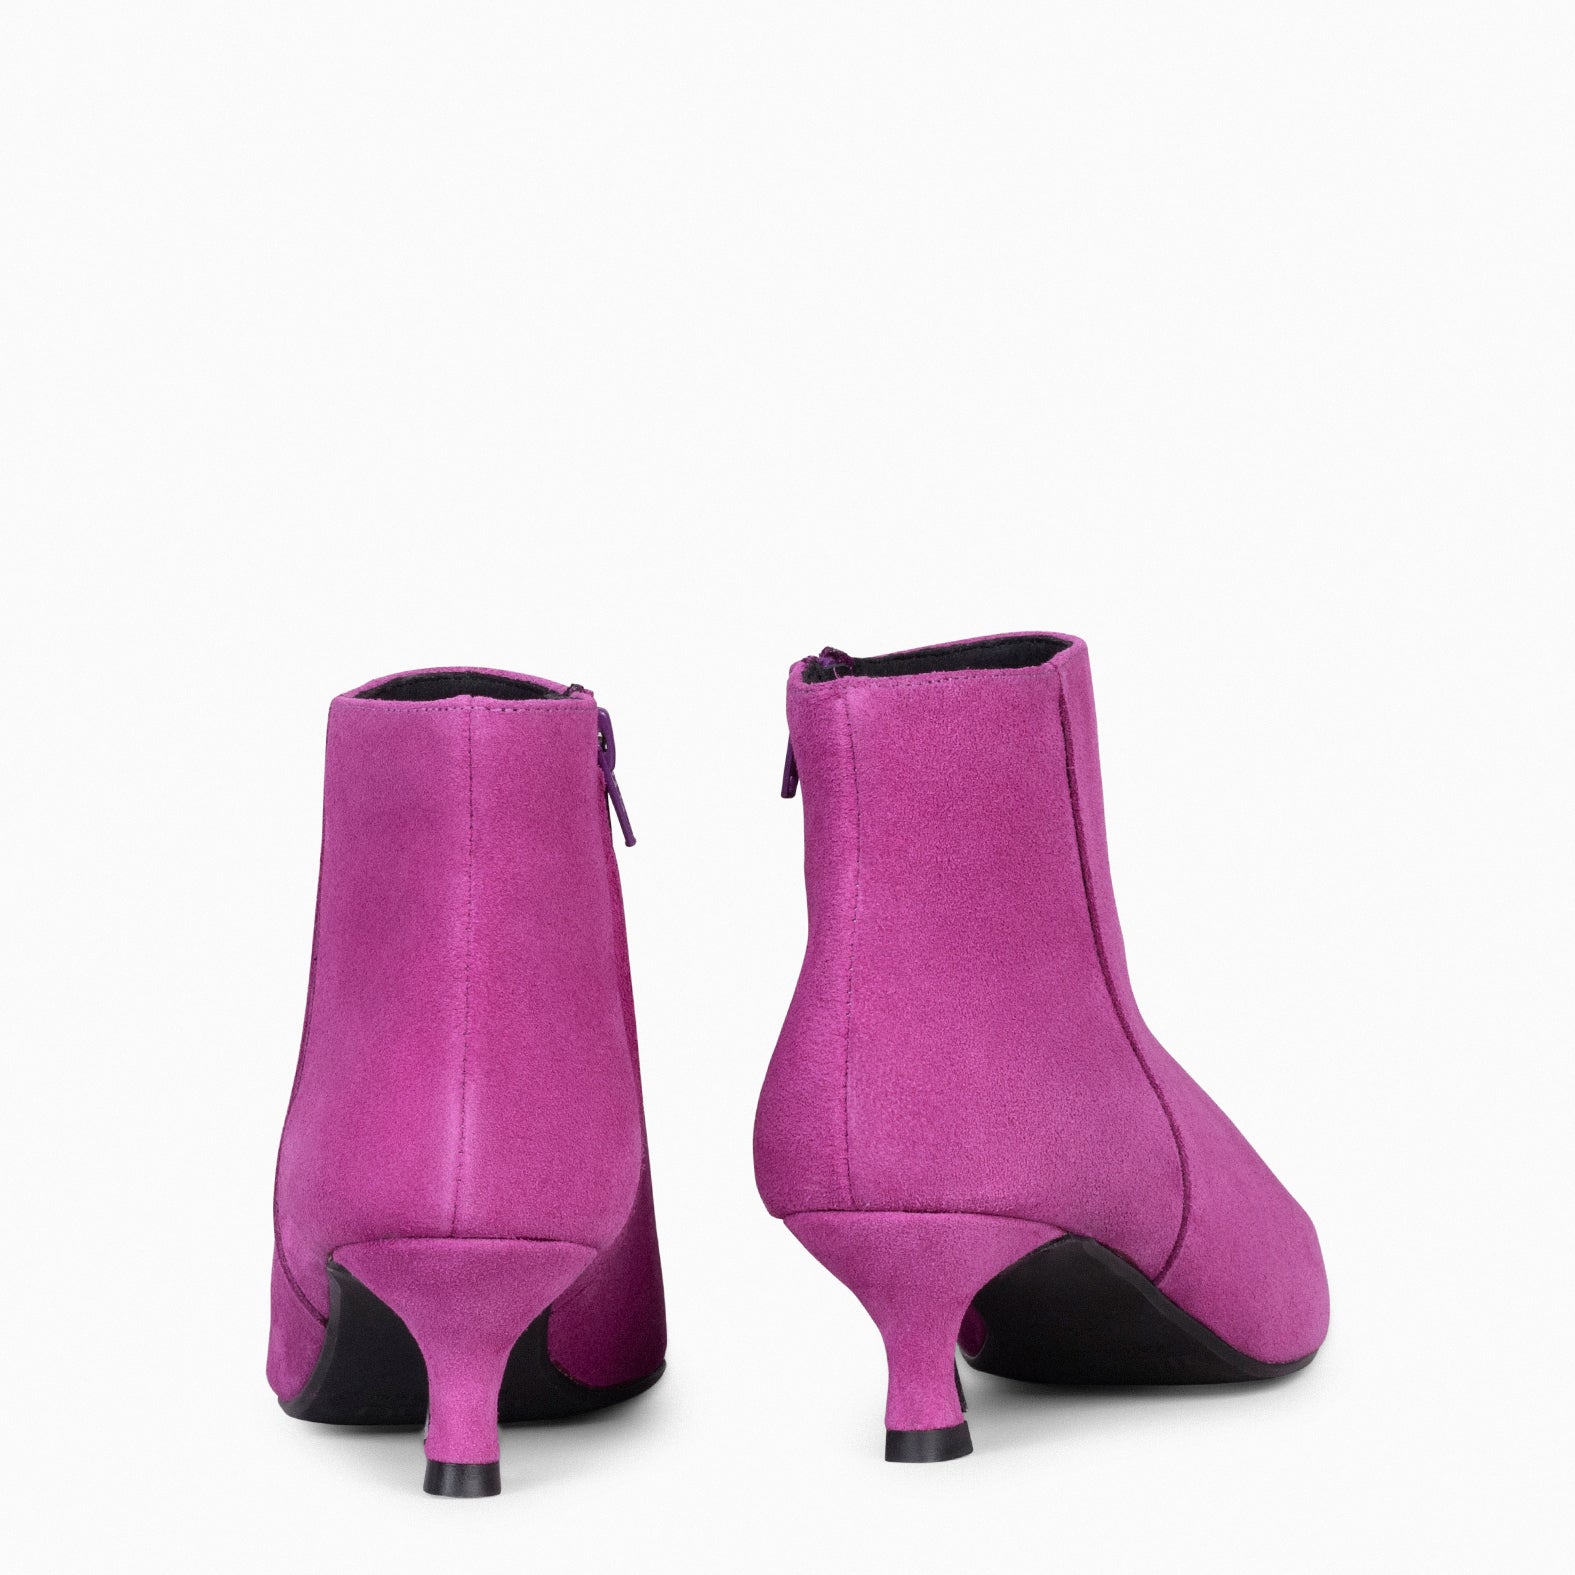 ROYAL SUEDE – FUCHSIA Low heel booties